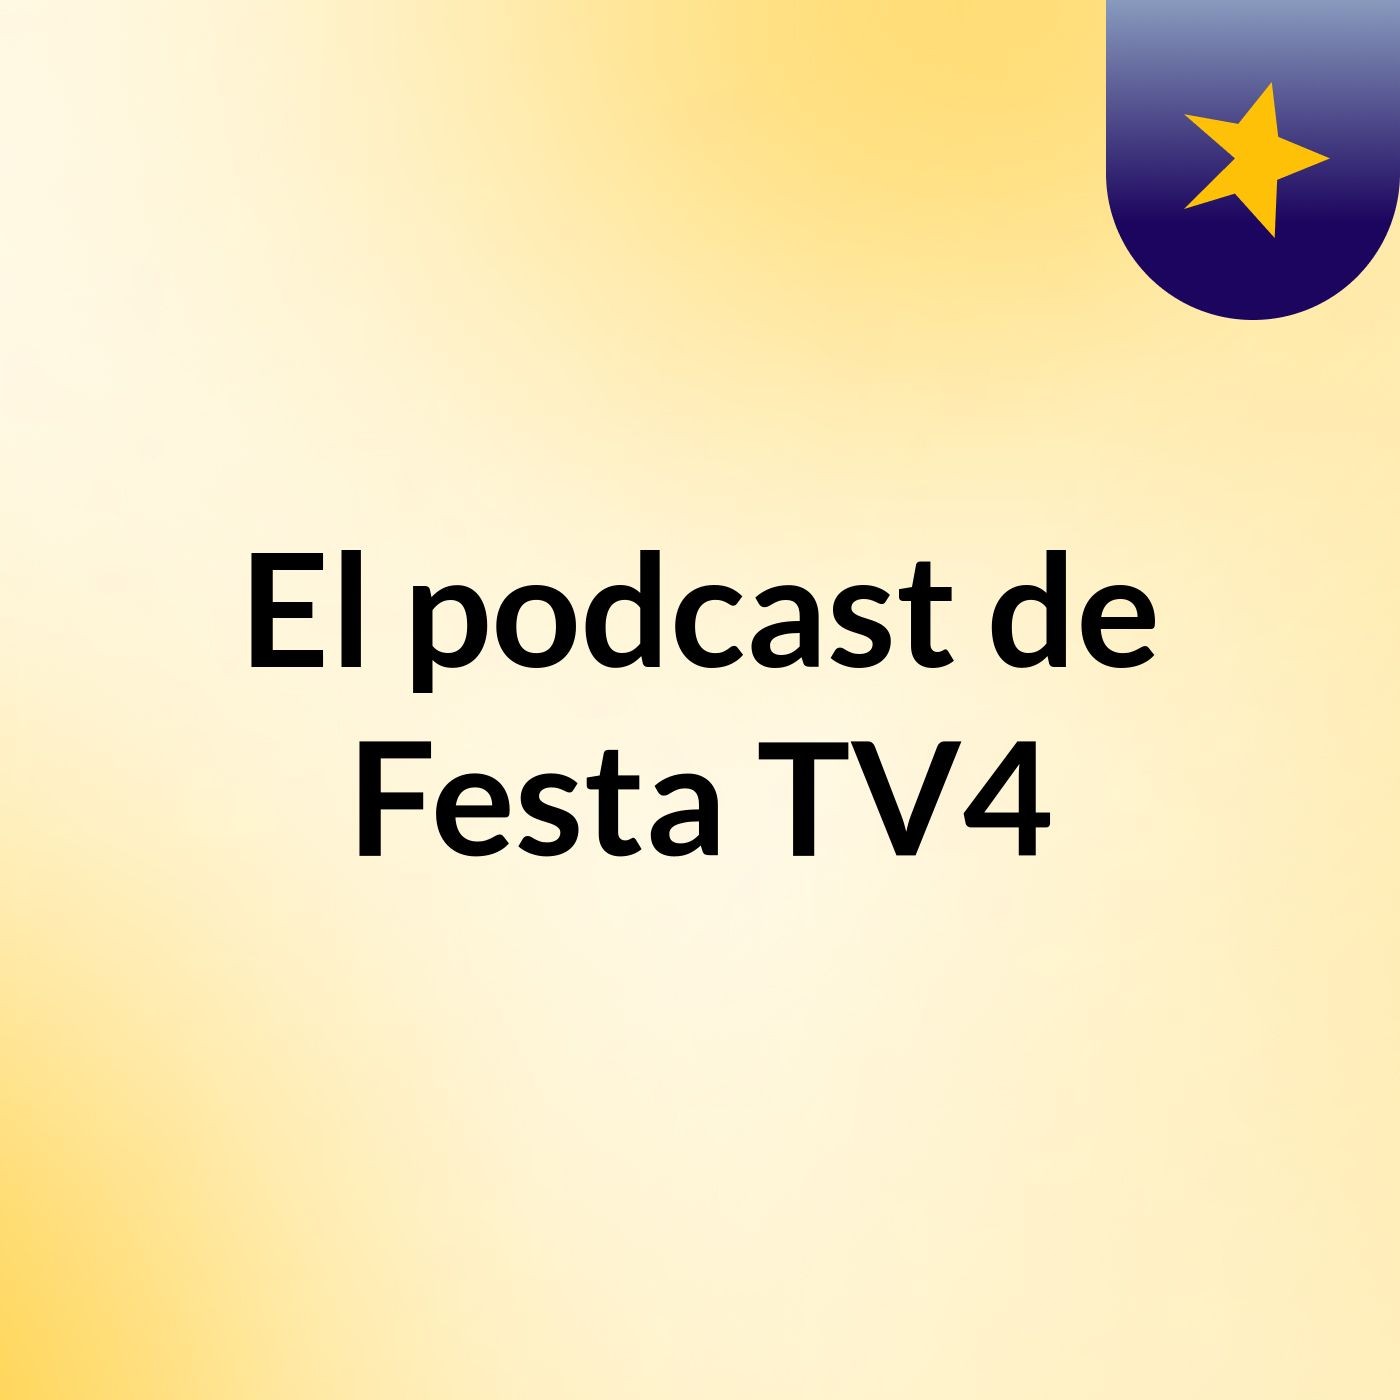 Episodio 1 - El podcast de Festa TV4